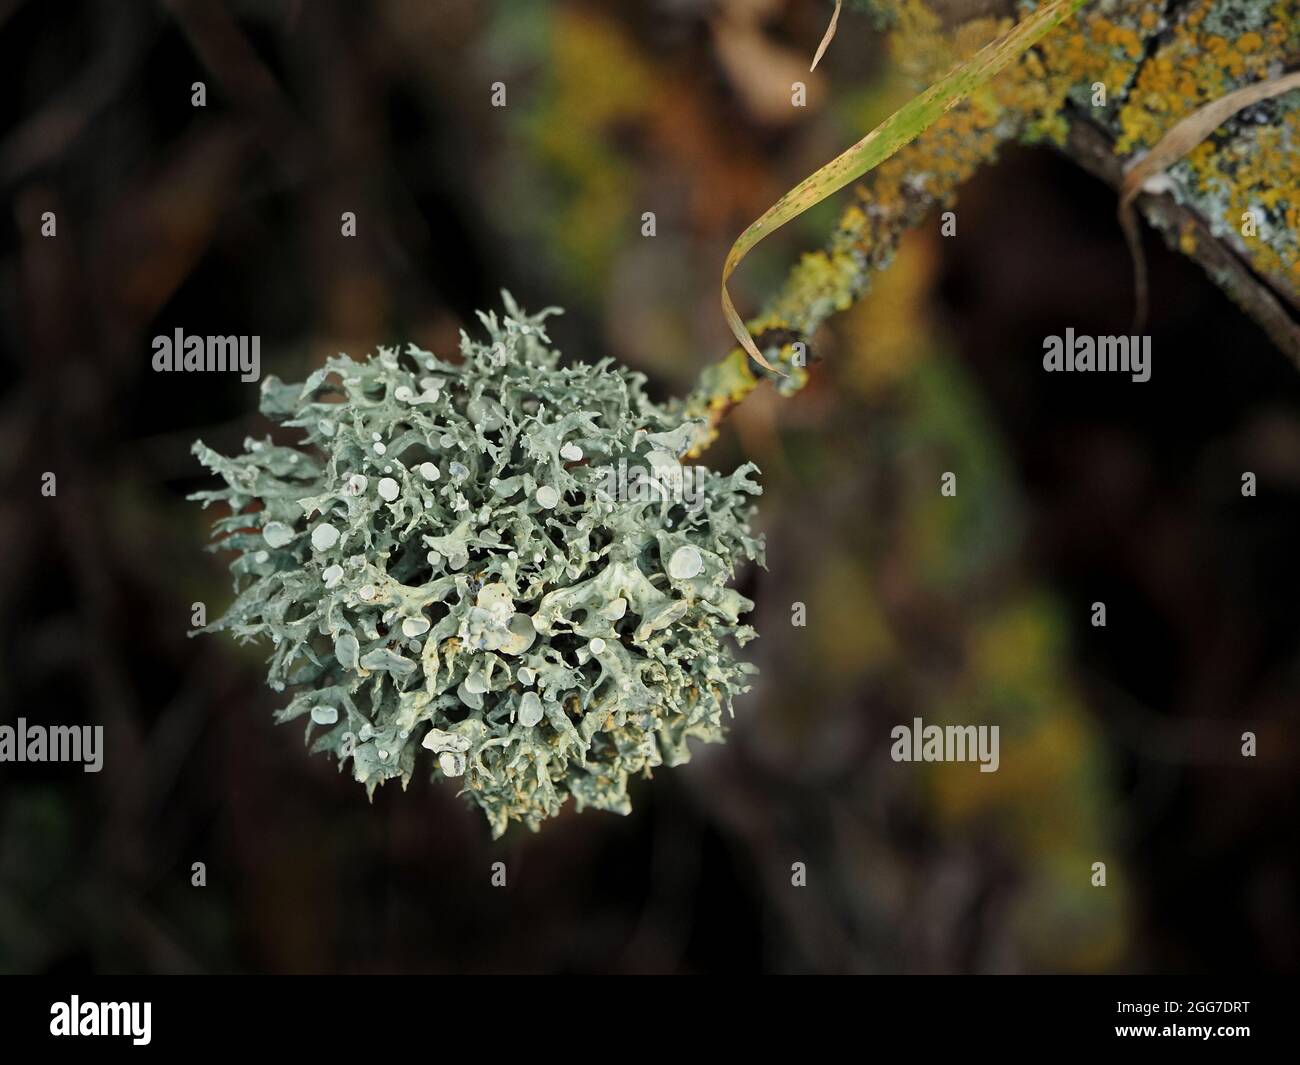 silver grey epiphytic fruticose lichen Ramalina fastigiata growing like a Christmas bauble on twig with yellow foliose lichen in Cumbria, England,UK Stock Photo